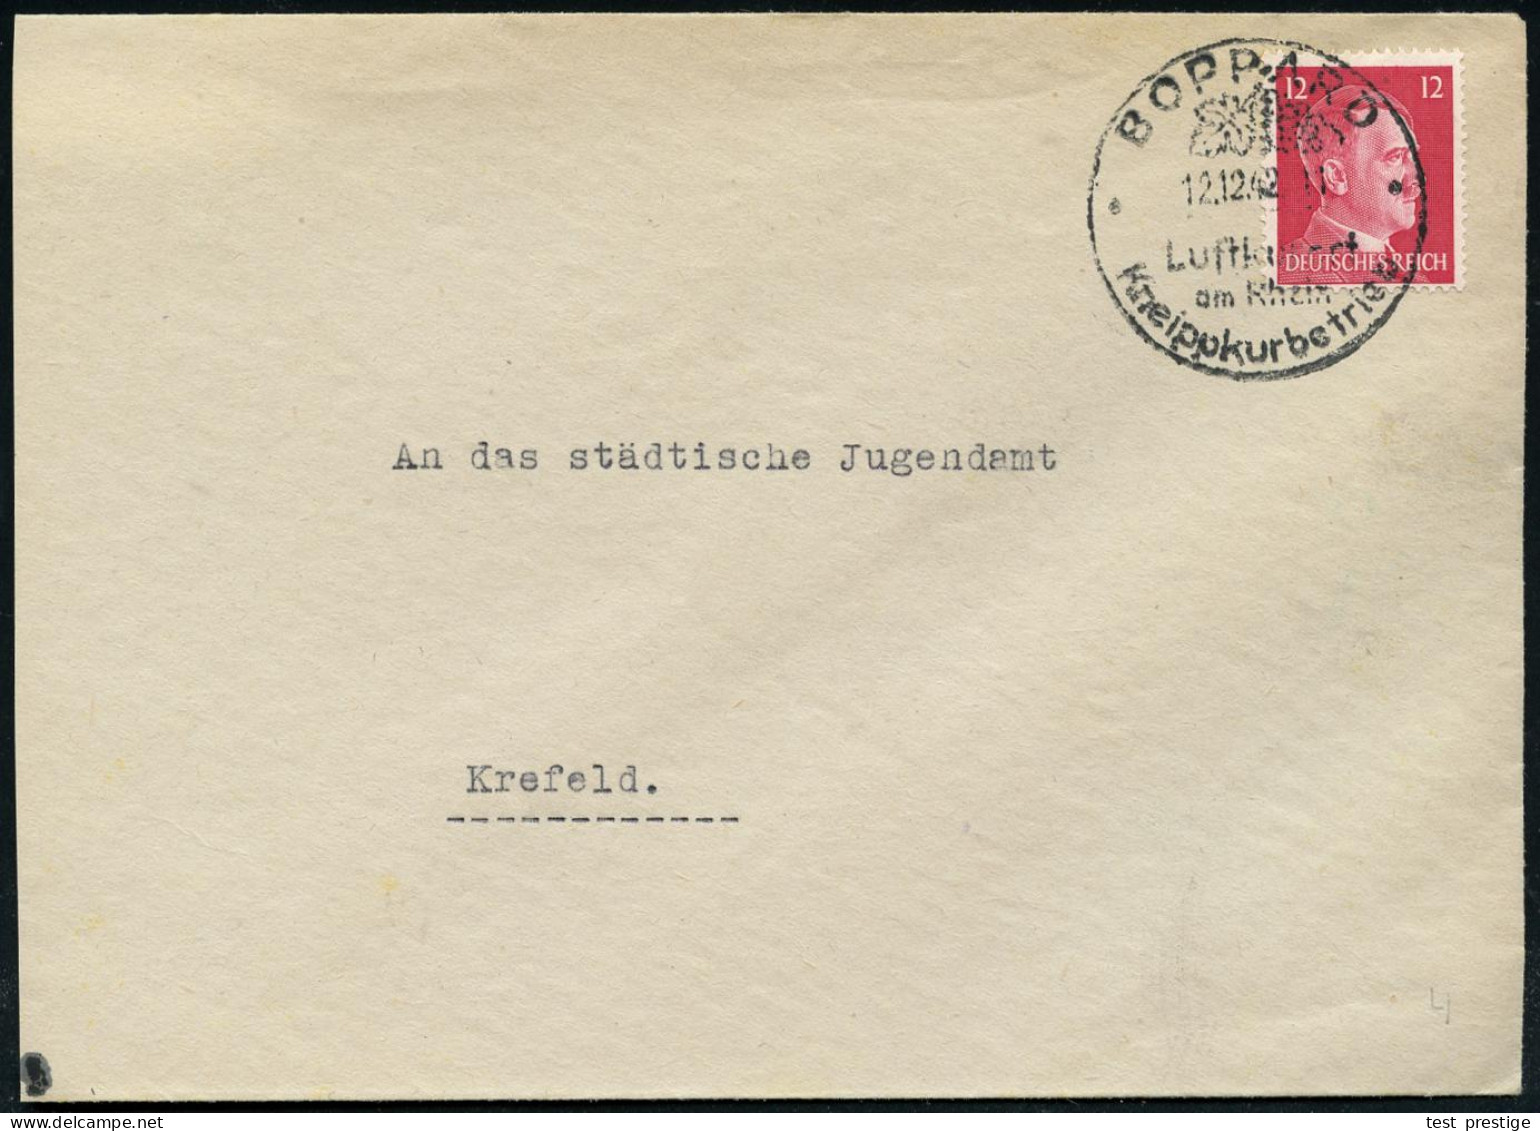 BOPPARD/ Luftkurort/ Am Rhein/ Kneippkurbetrieb 1942 (12.12.) Seltener HWSt (Weinblatt) Fernbf. (Bo.4) - SEBASTIAN KNEIP - Medizin